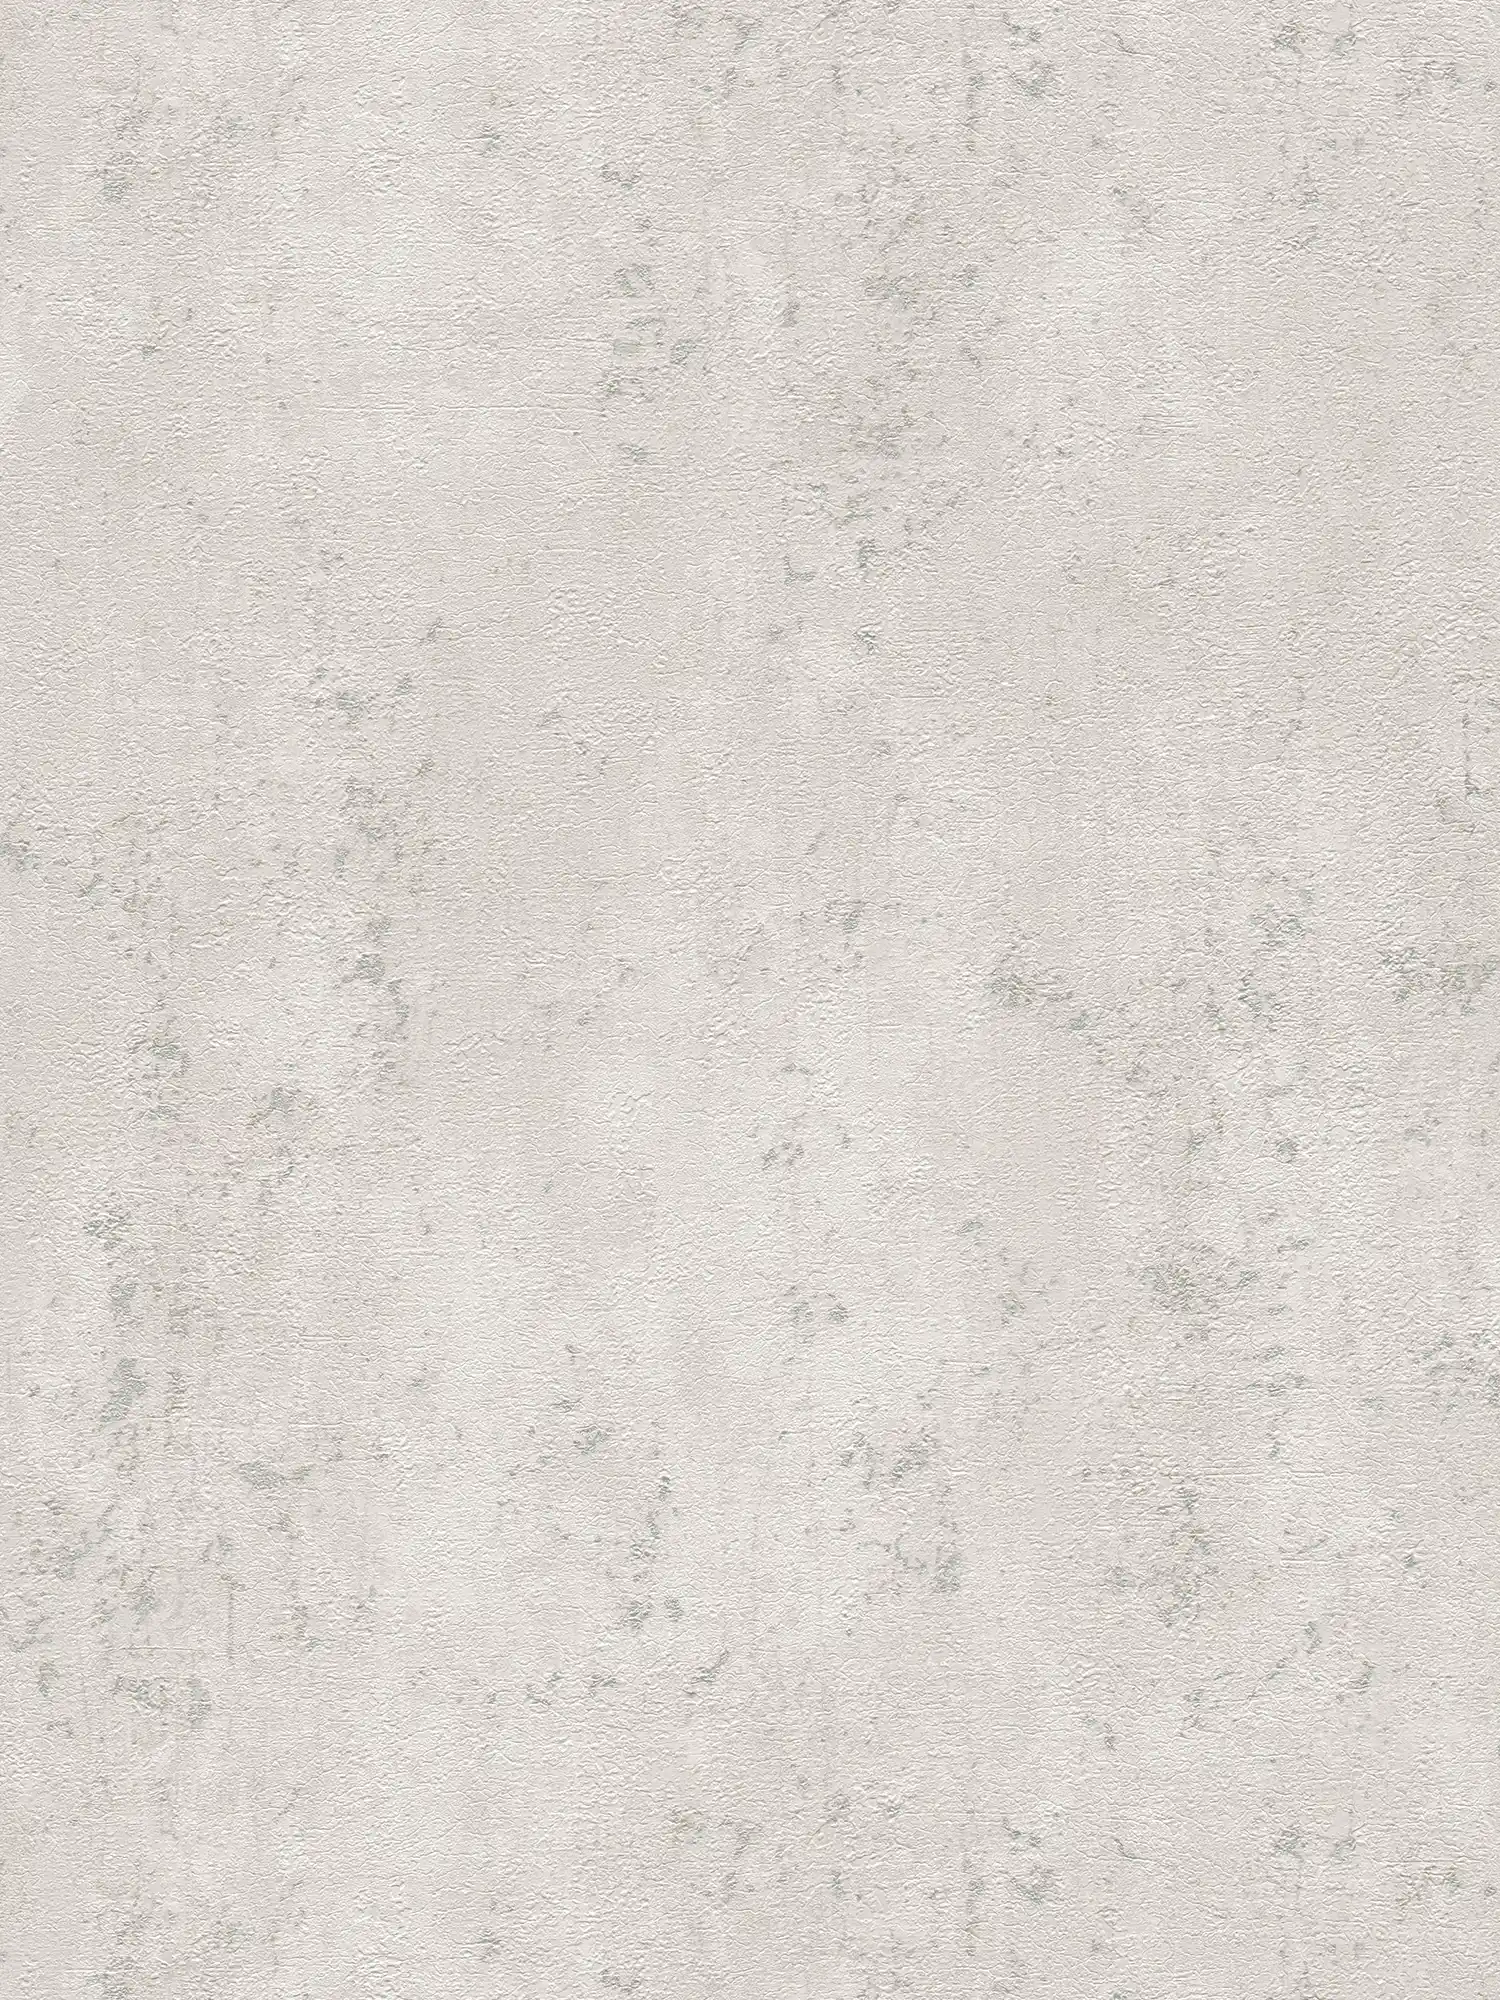 Wallpaper with structure embossing in plaster look - beige, brown
